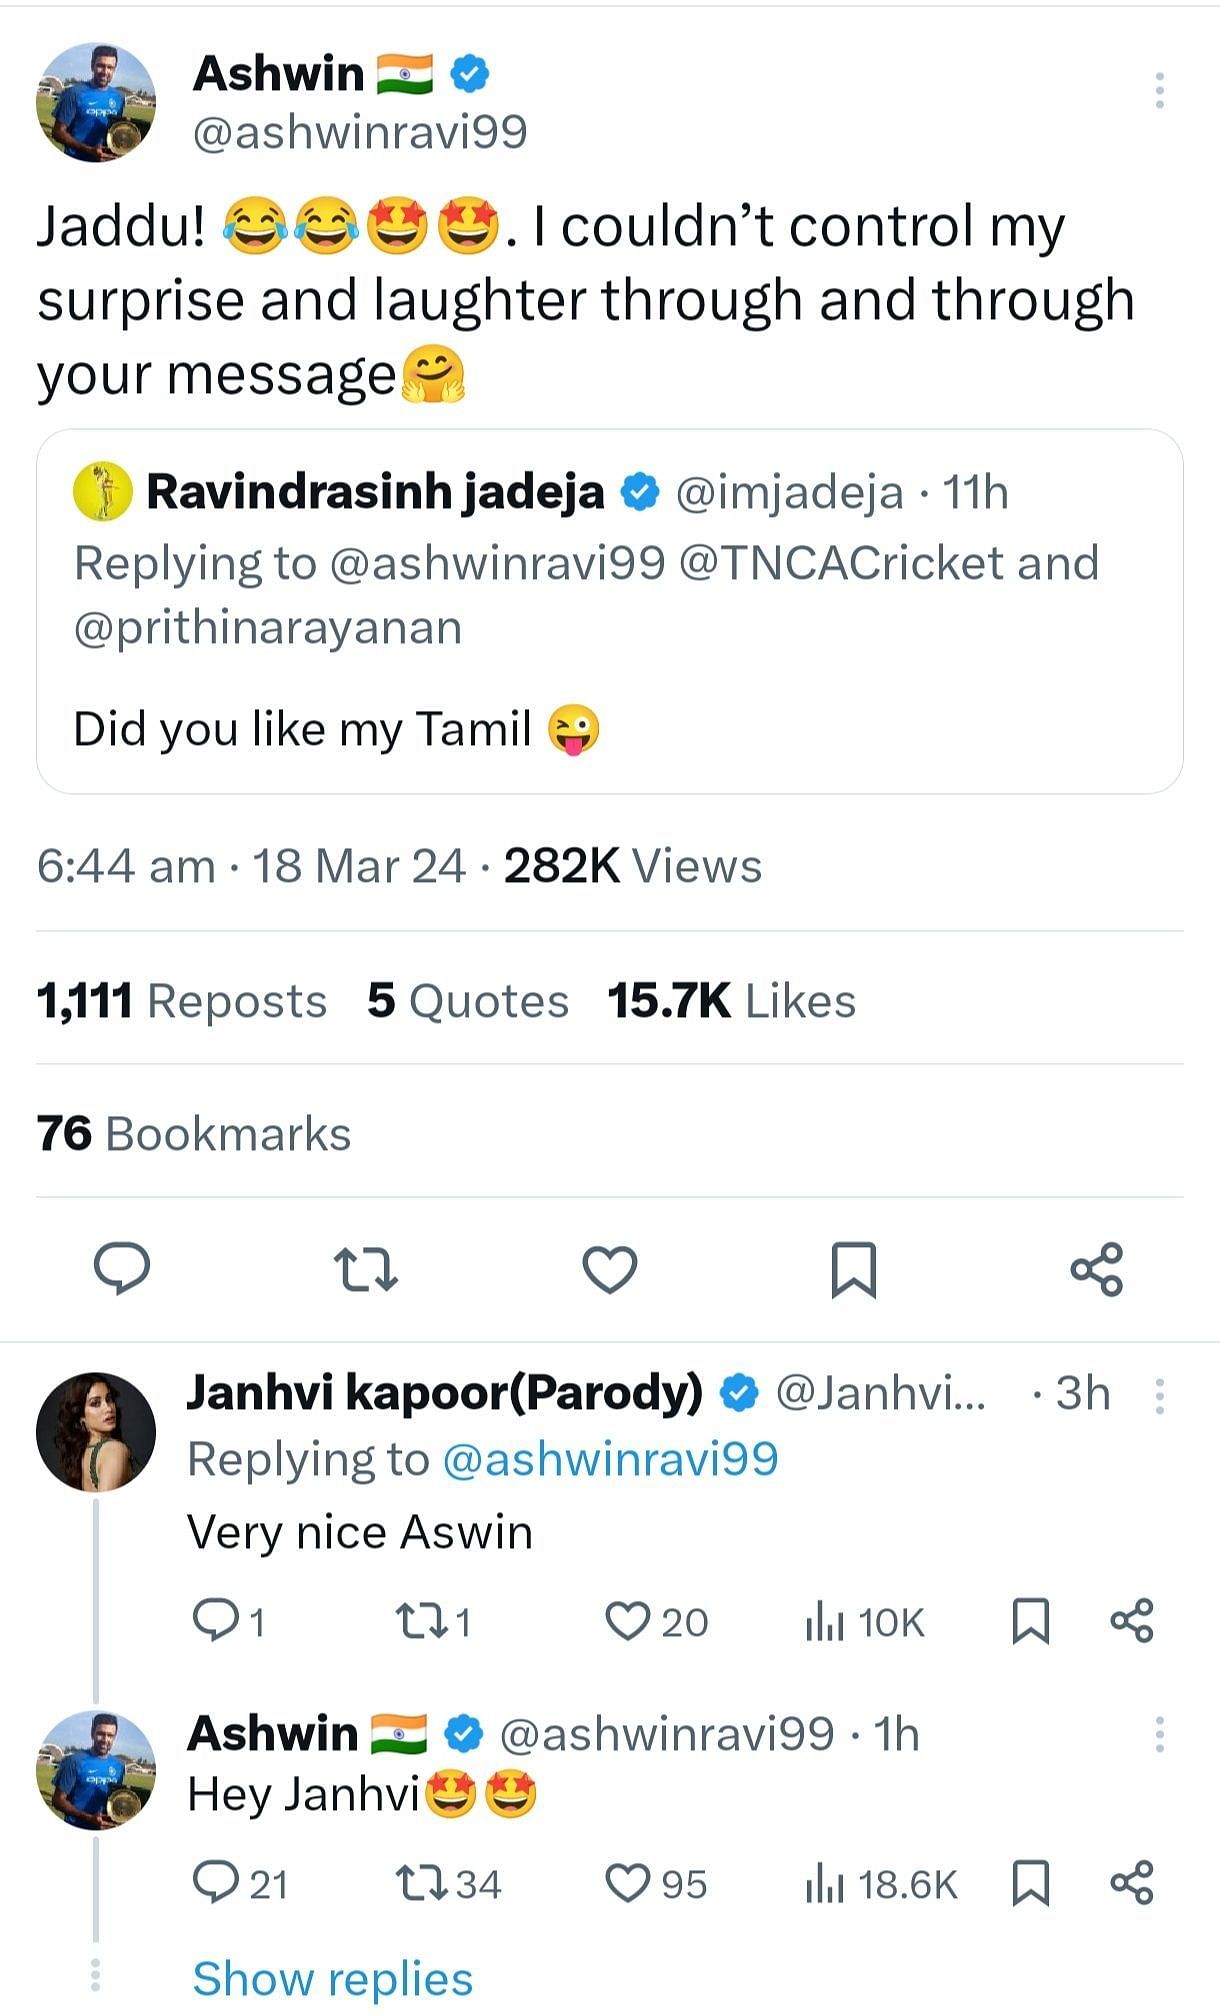 Screenshot of the conversation between Ravichandran Ashwin and the parody account